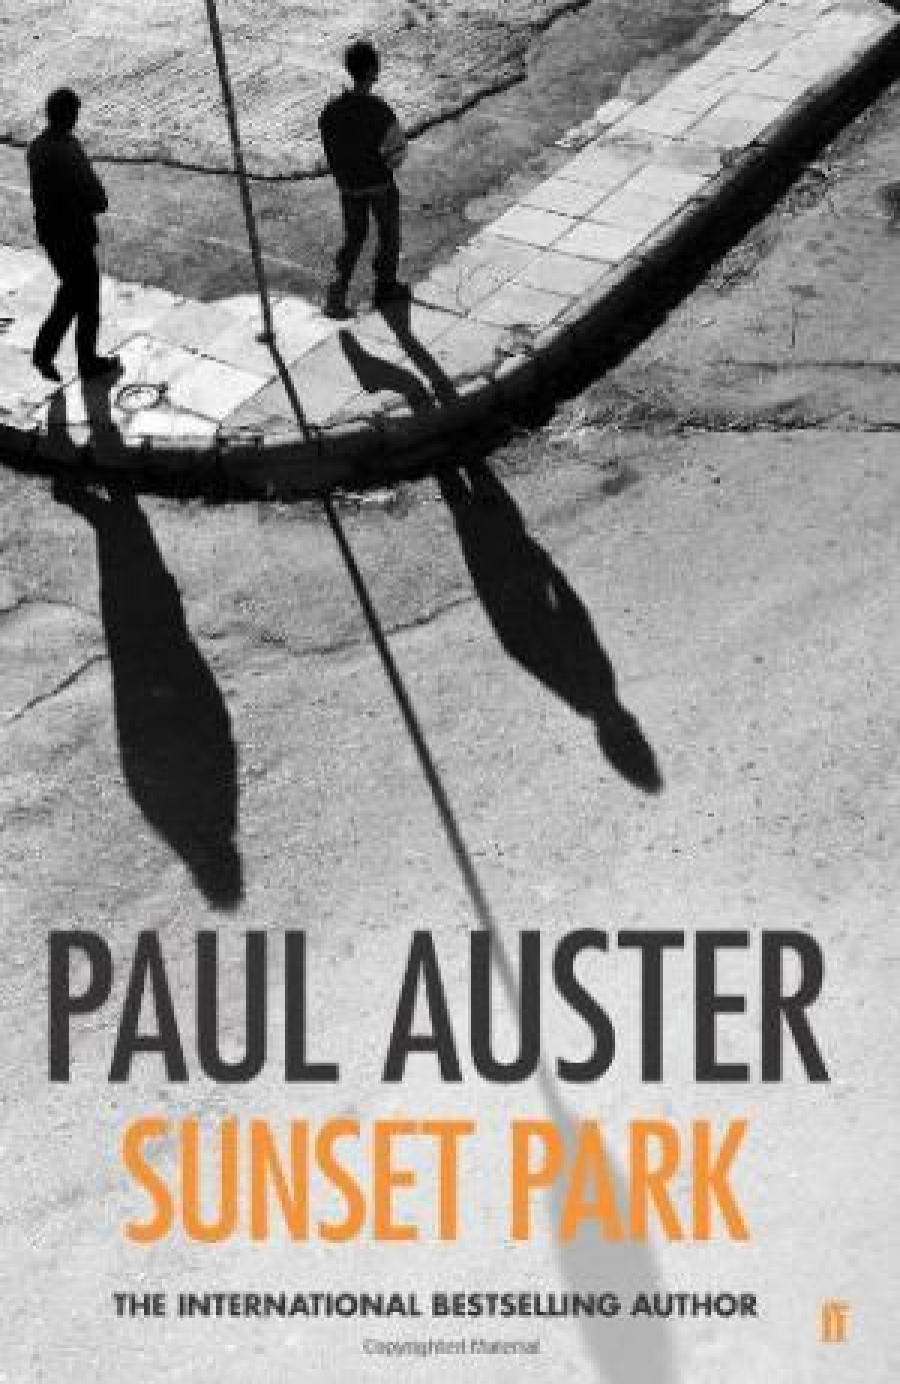 Paul, Auster Sunset Park 